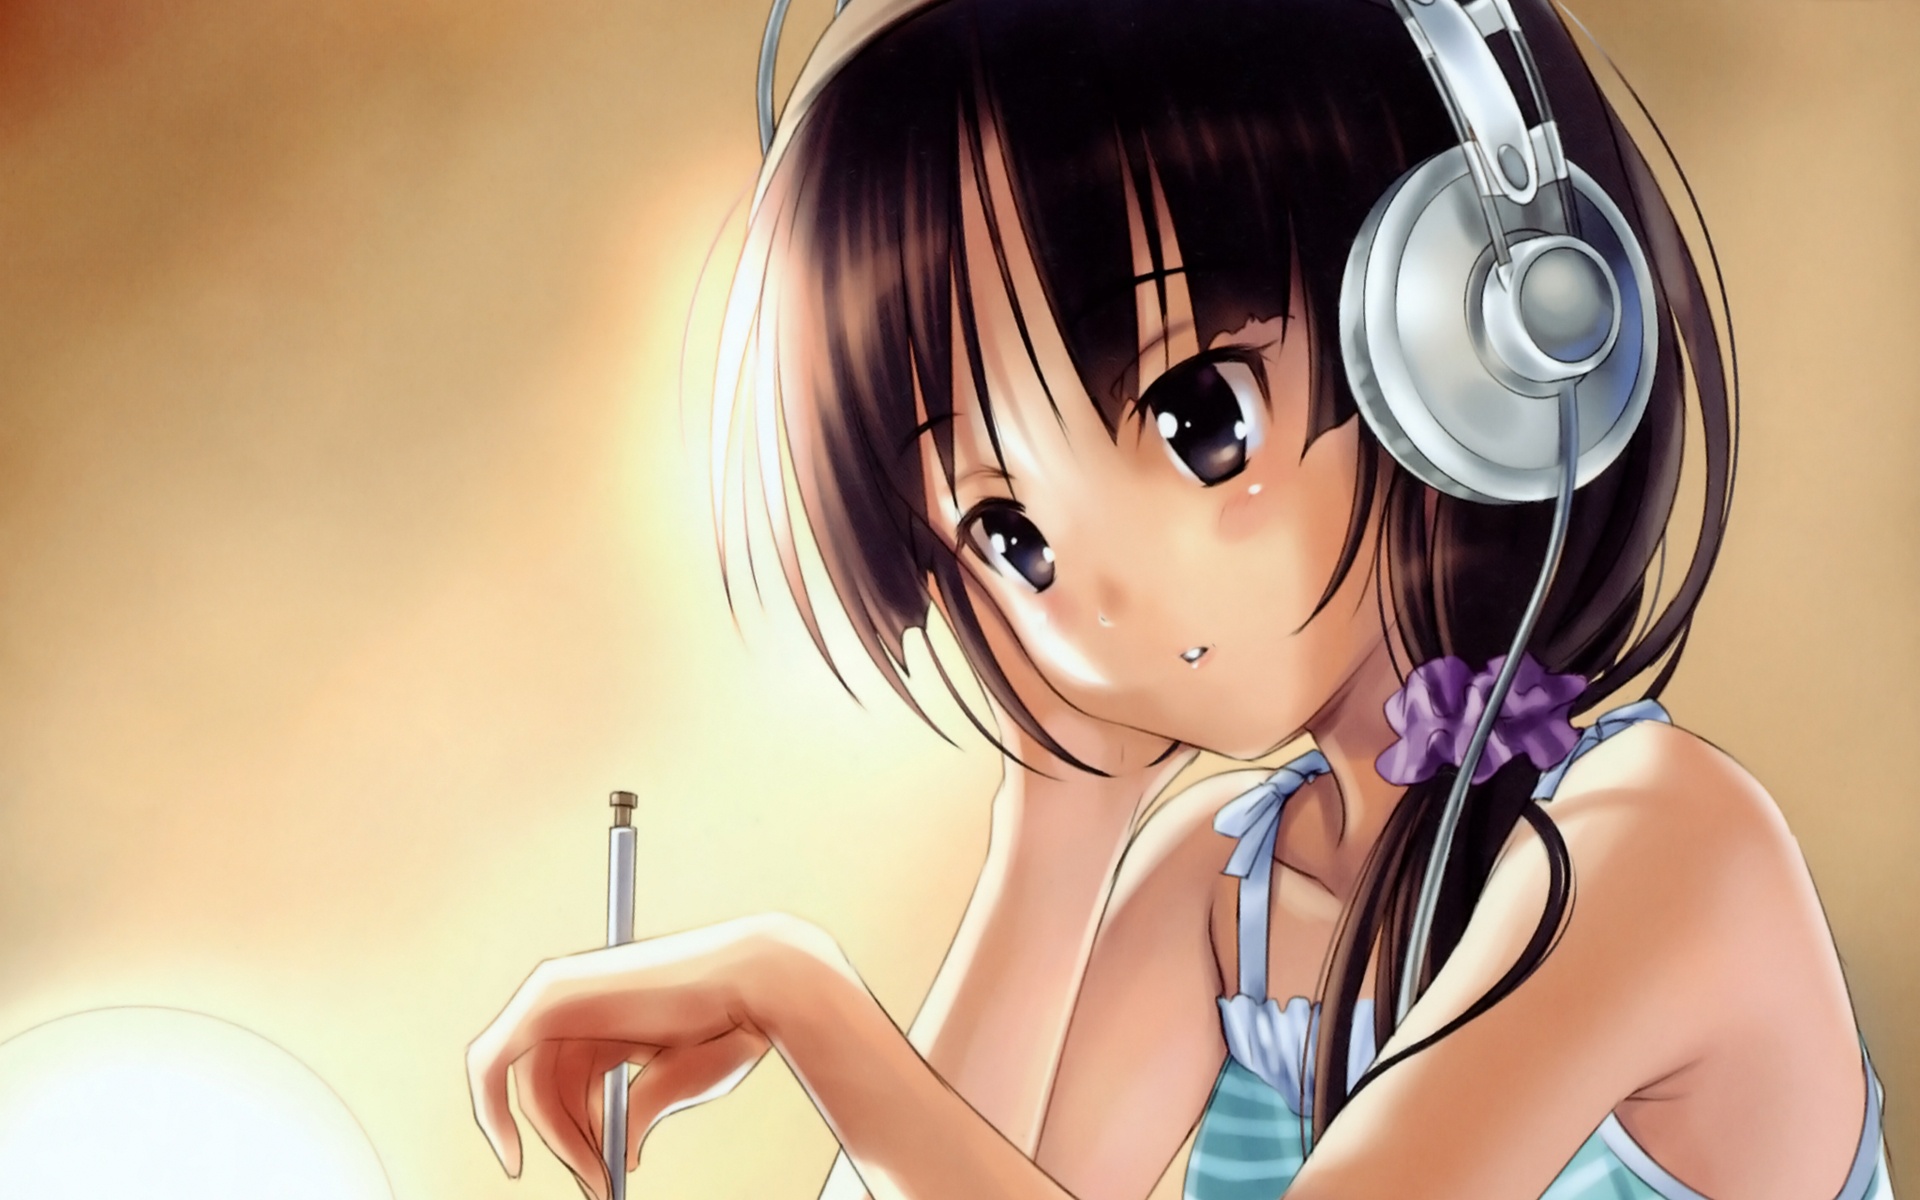 22349_anime_girls_anime_girl_with_headphone.jpg